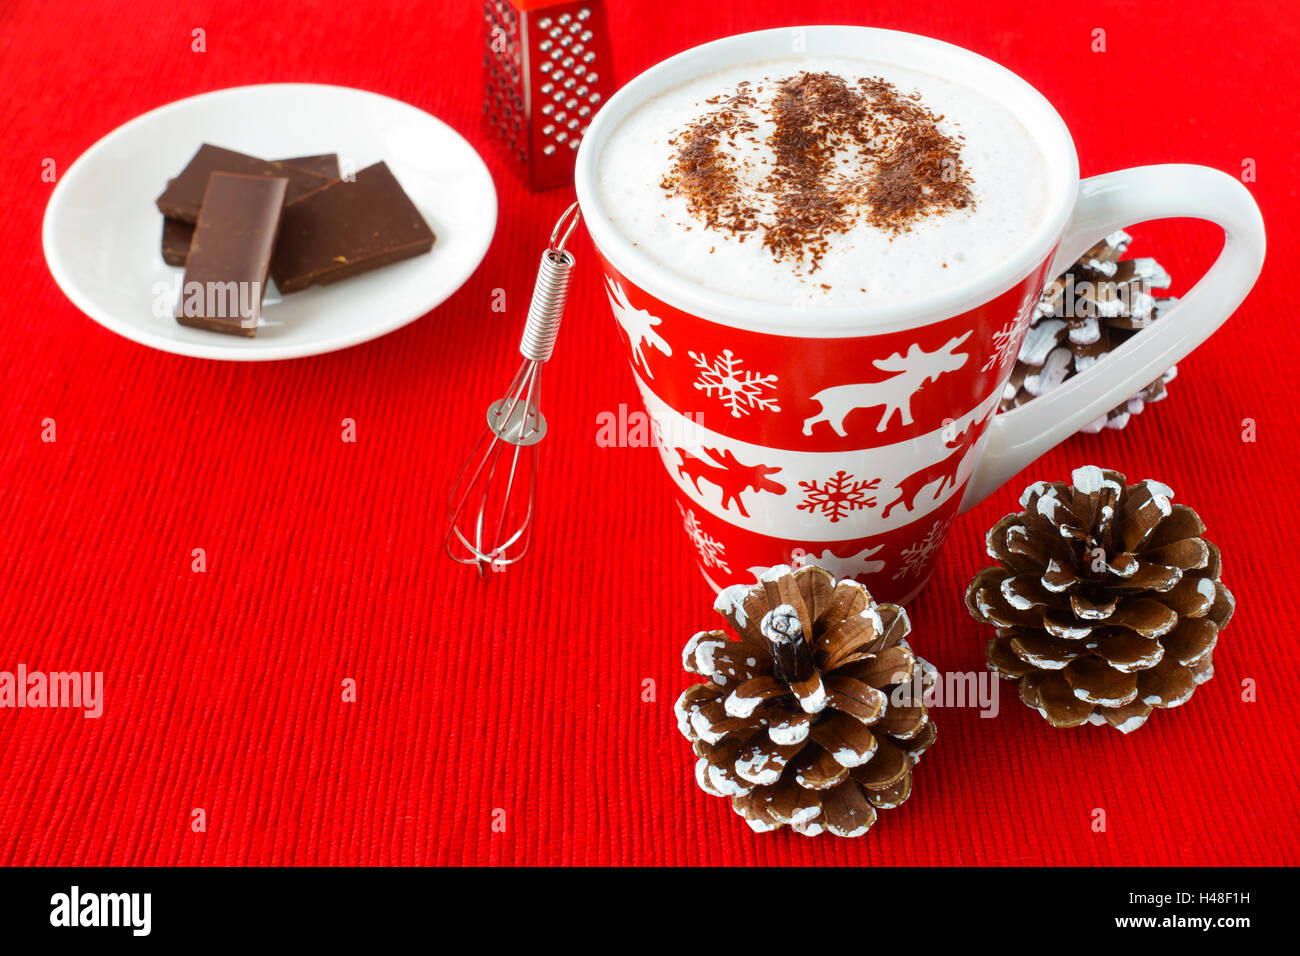 Red Coffee Mug - Ceramic - set of 2 - Cozy Hot Tea Milk Chocolate Cocoa  Holiday Mugs w/Coasters